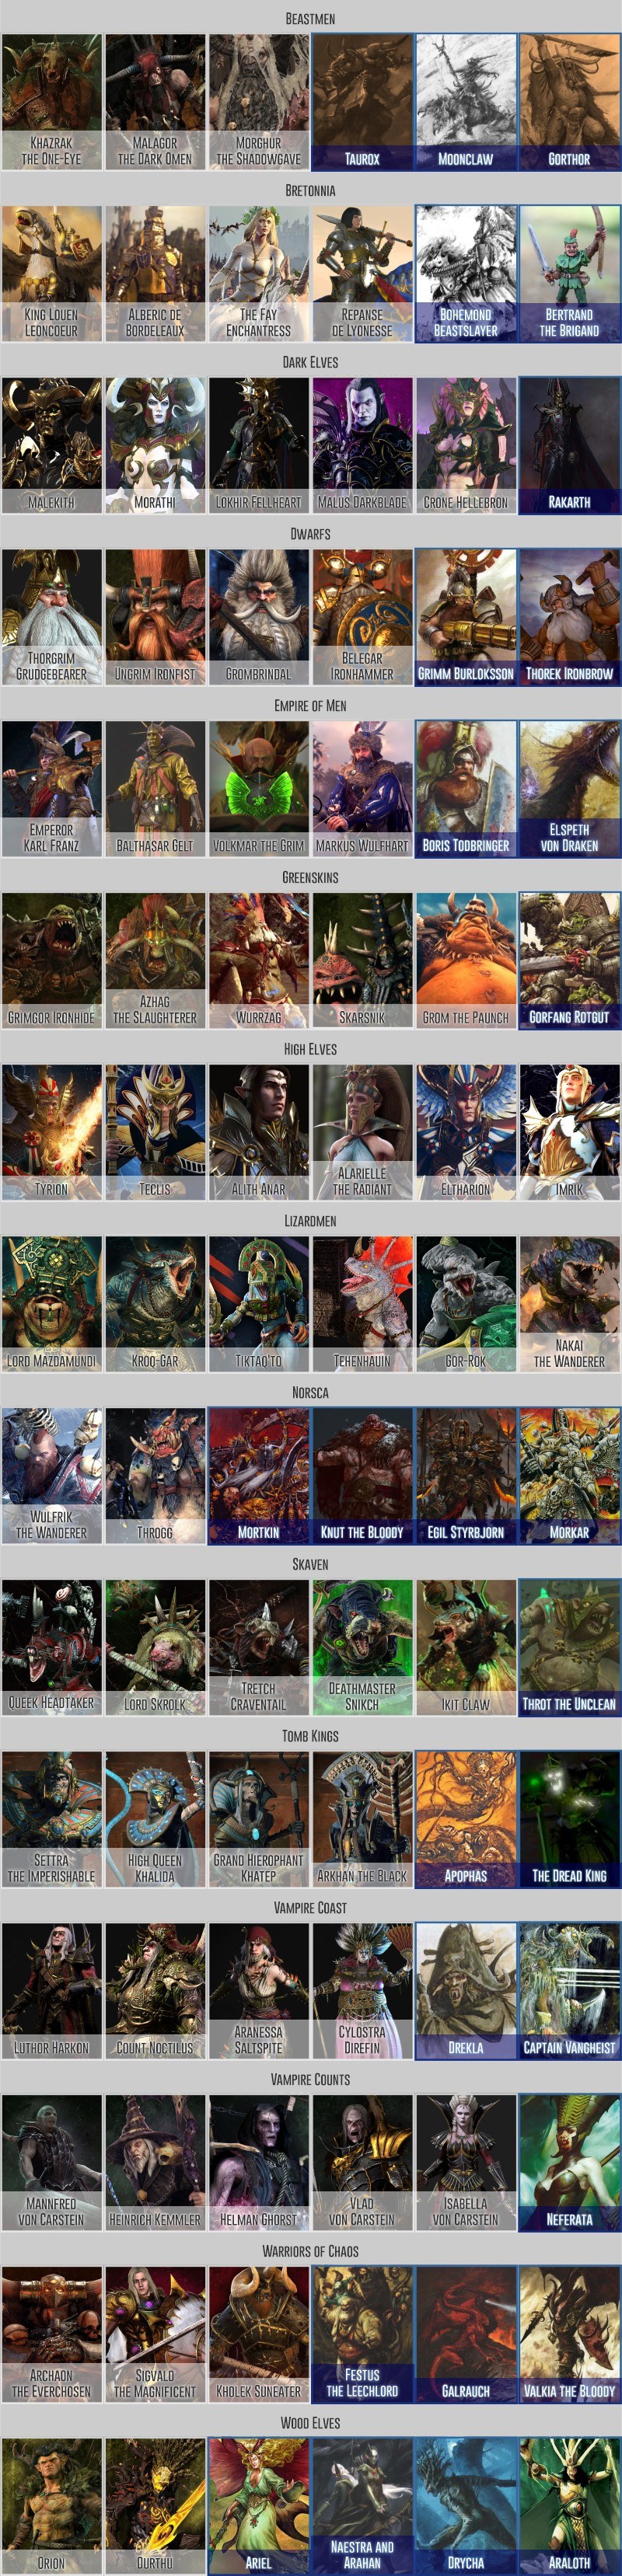 warhammer total war 2 faction guide